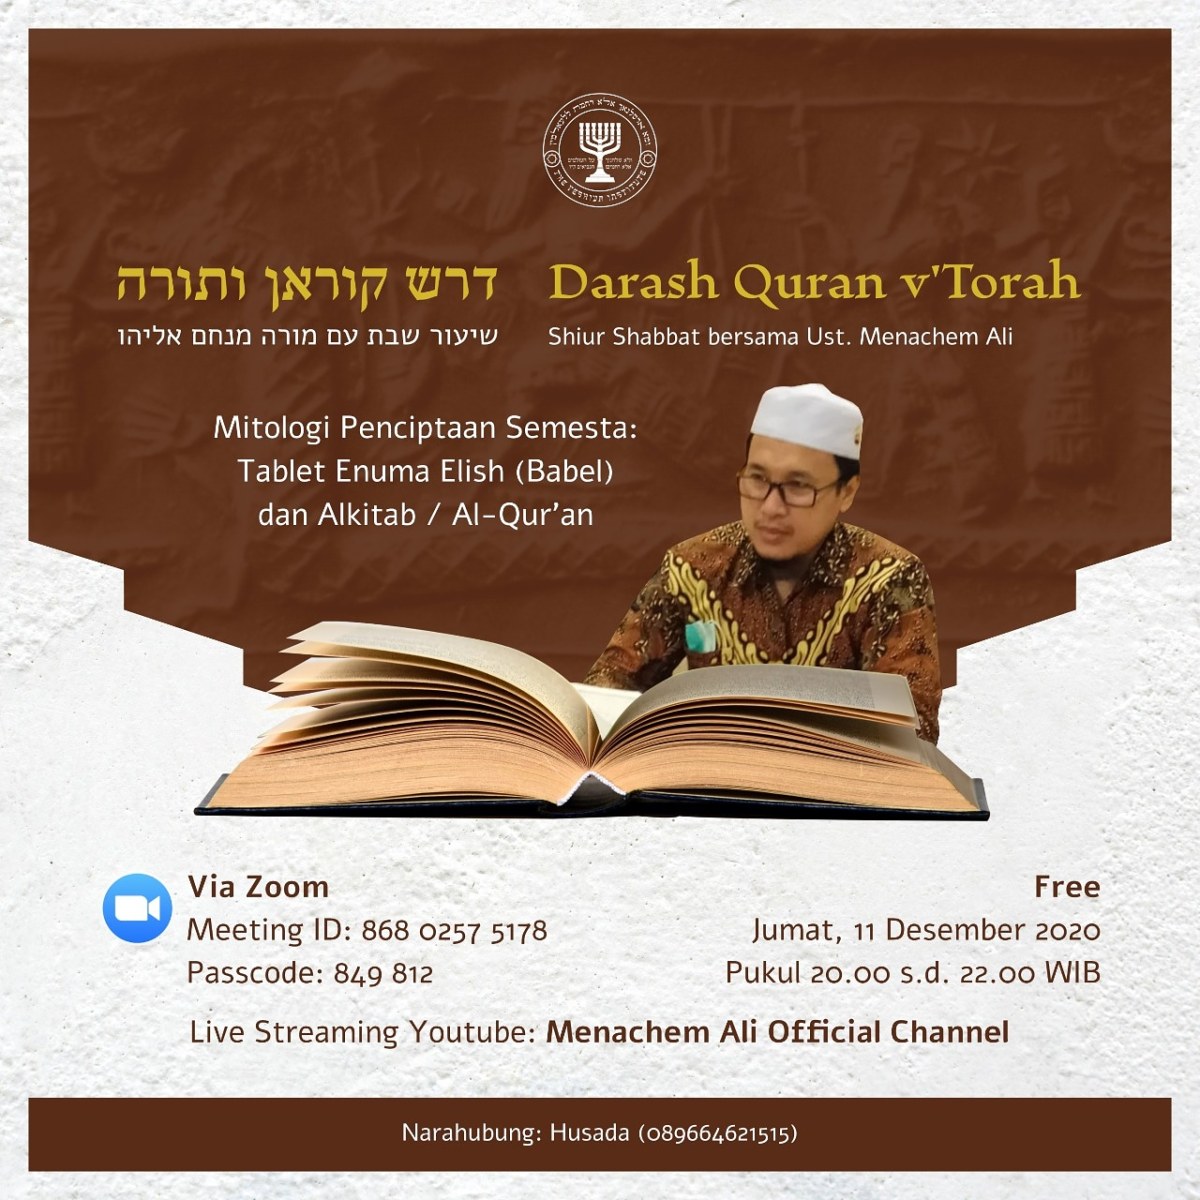 Darash Qur’an V’Torah, Mitologi Penciptaan Semesta Tablet Enuma Elish (Babel) dalam kaitannya dengan Alkitab & Al-Qur’an